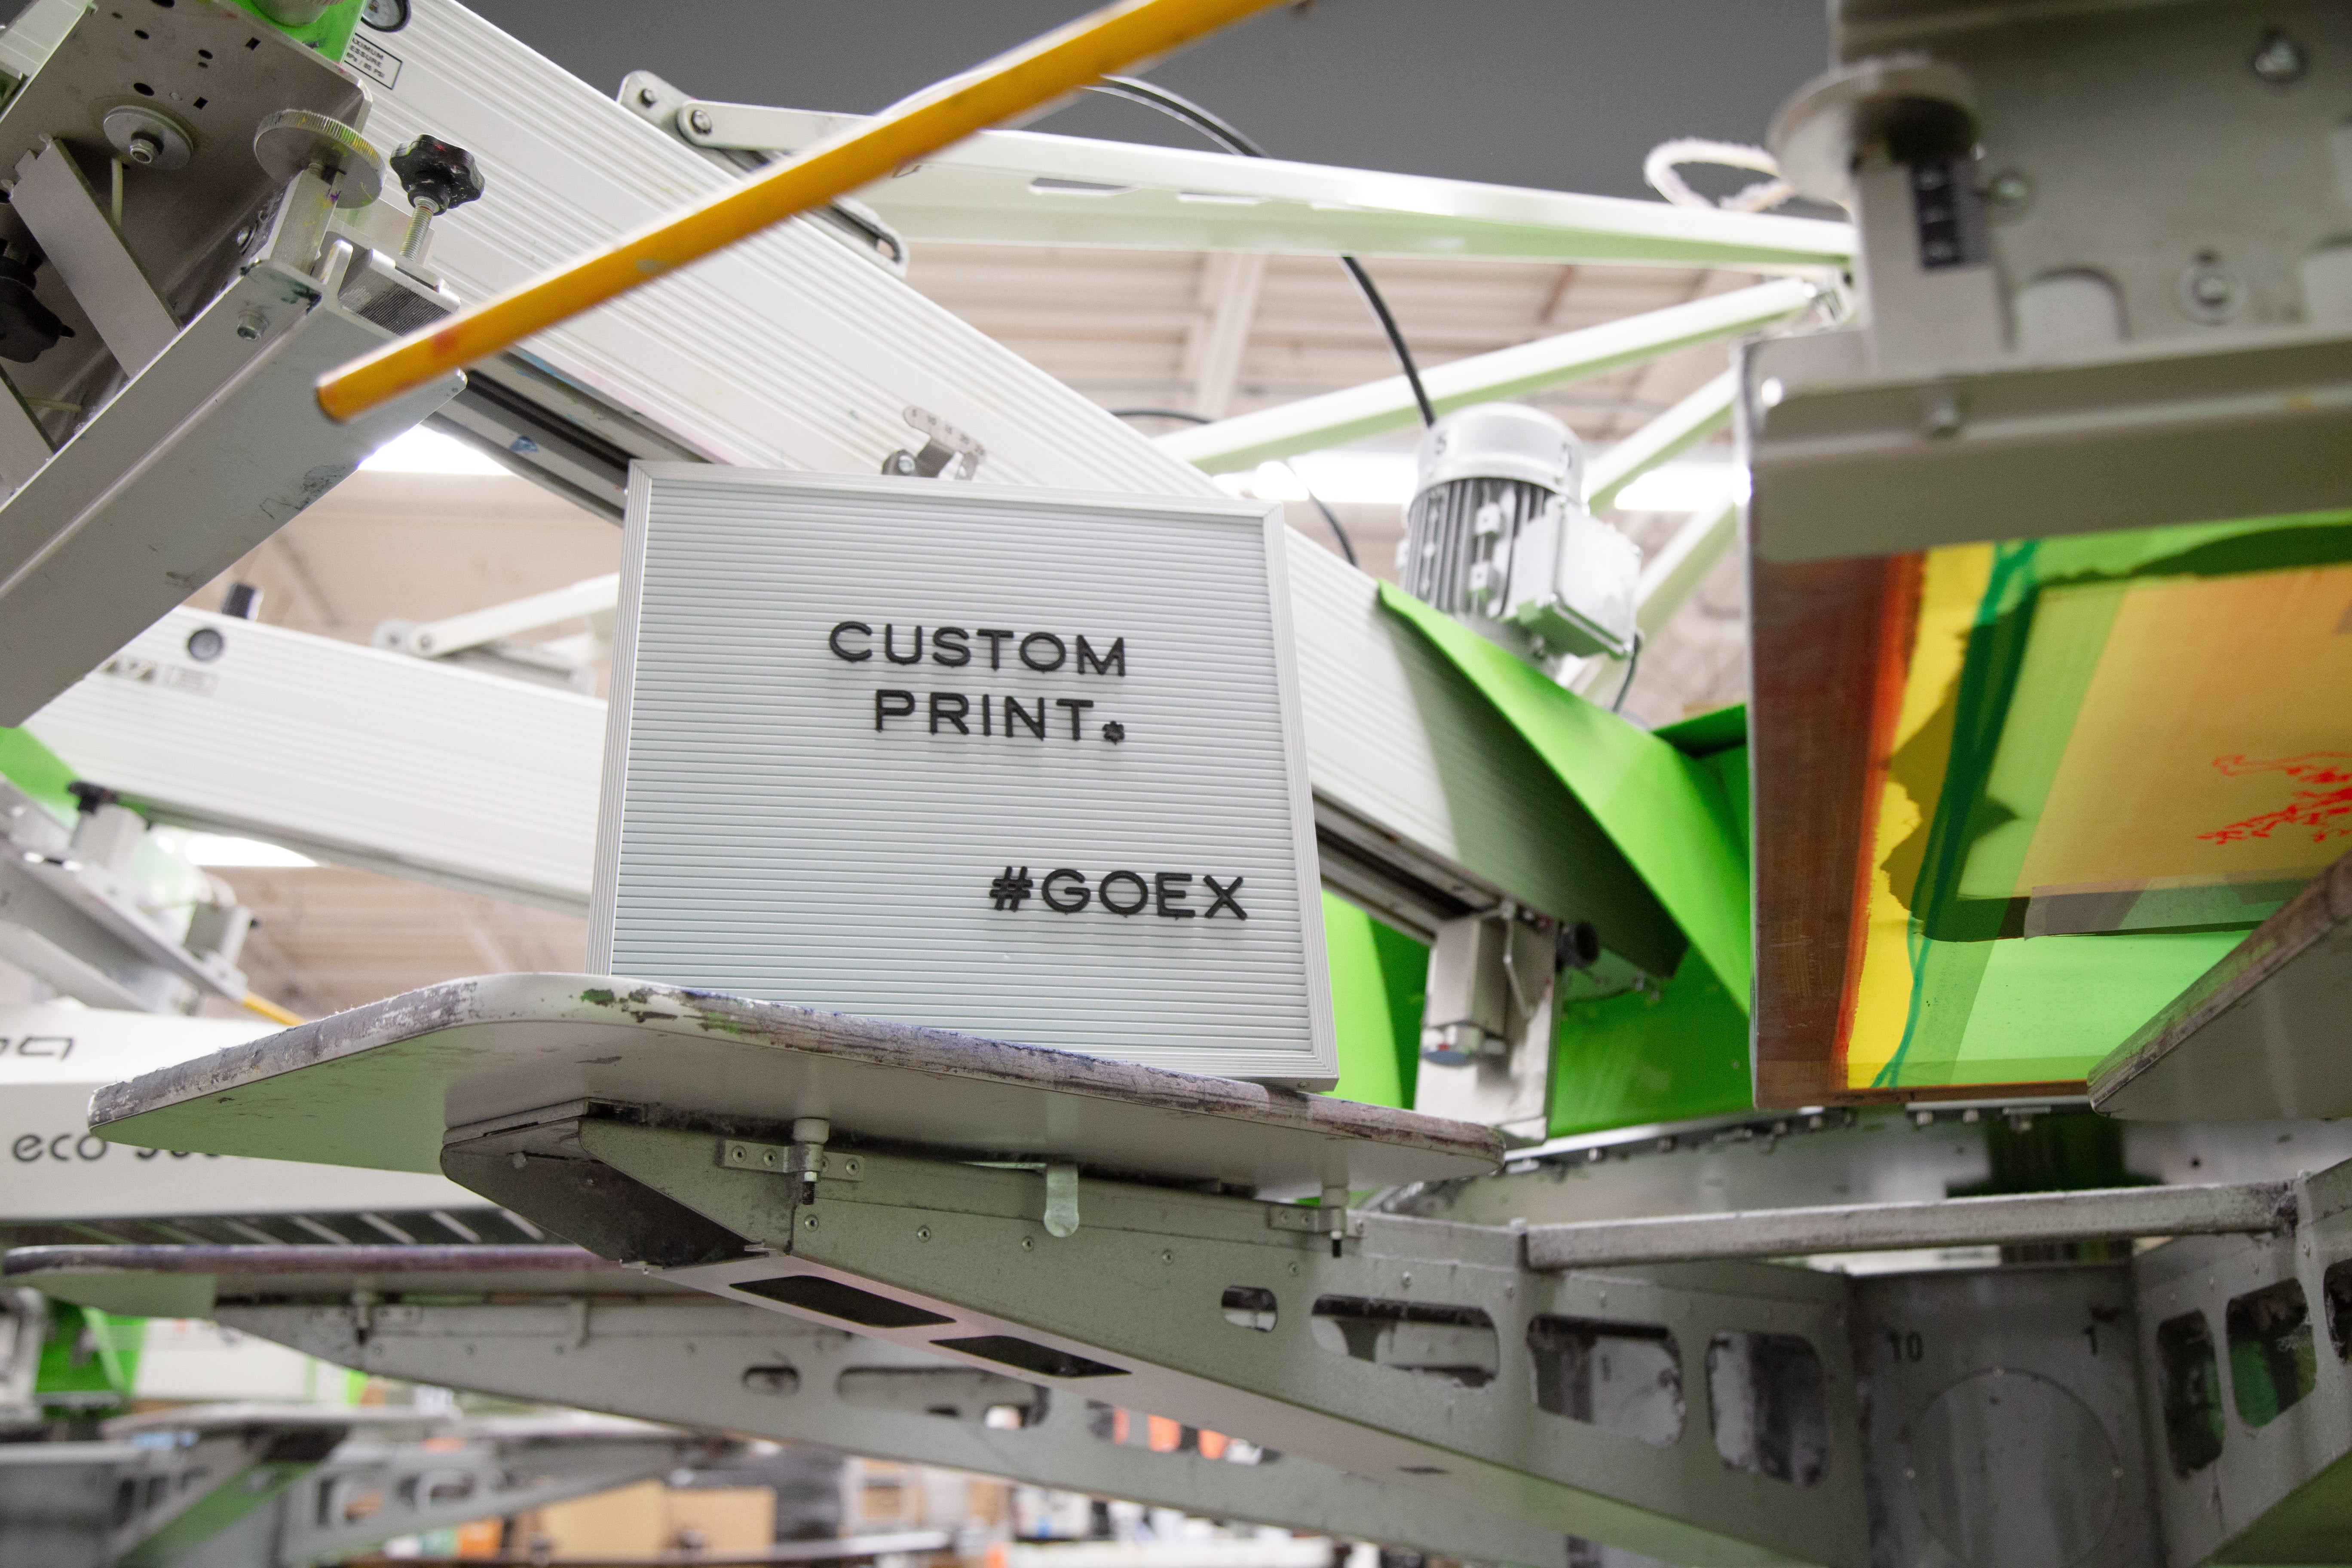 Message board on Printing Press that says "Custom Print. #GOEX"